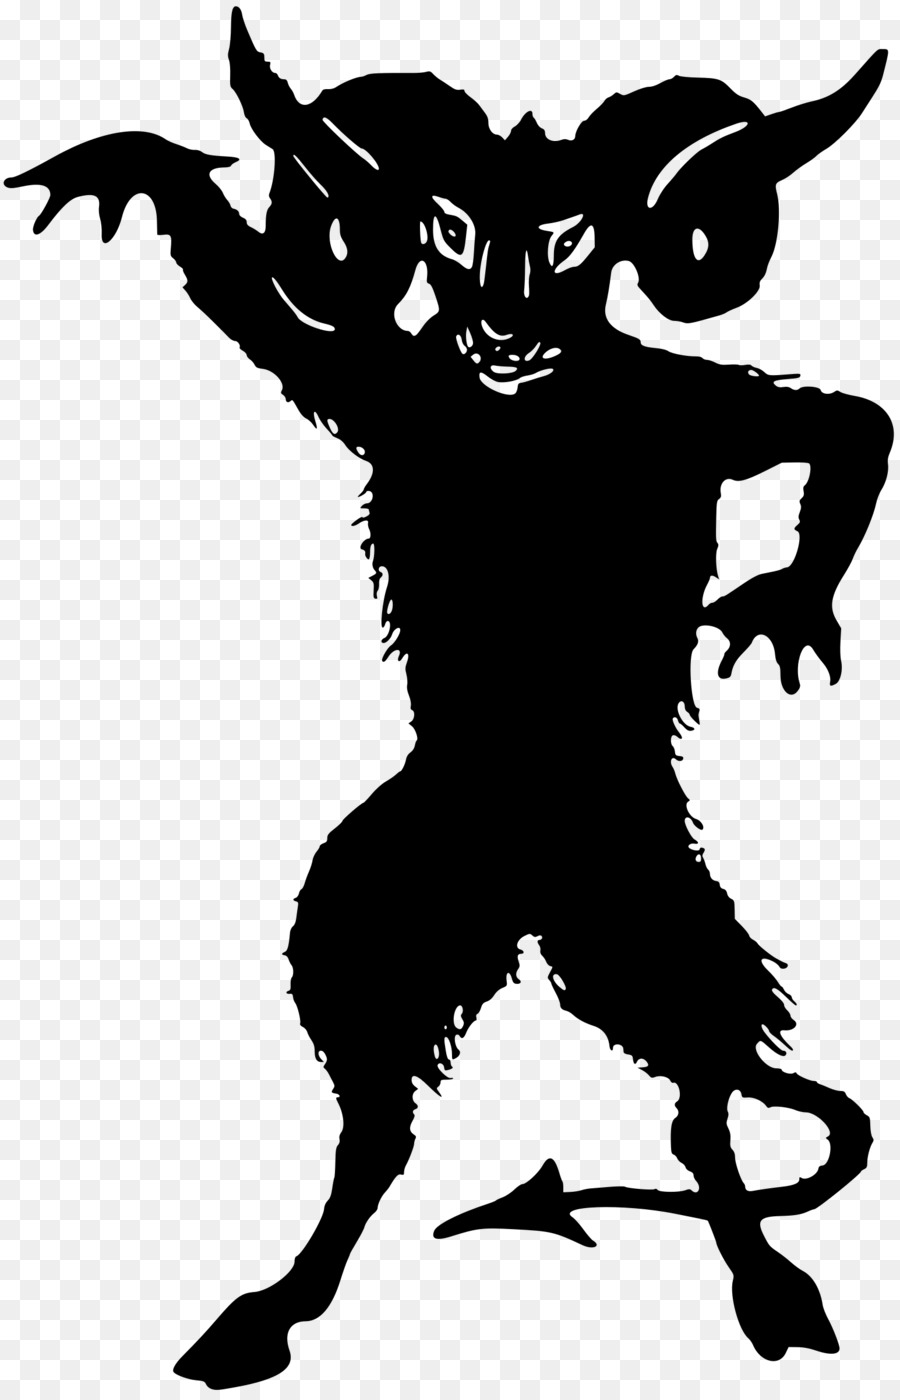 Jersey Devil Silhouette Demon Clip art - creepy png download - 1545*2400 - Free Transparent Devil png Download.